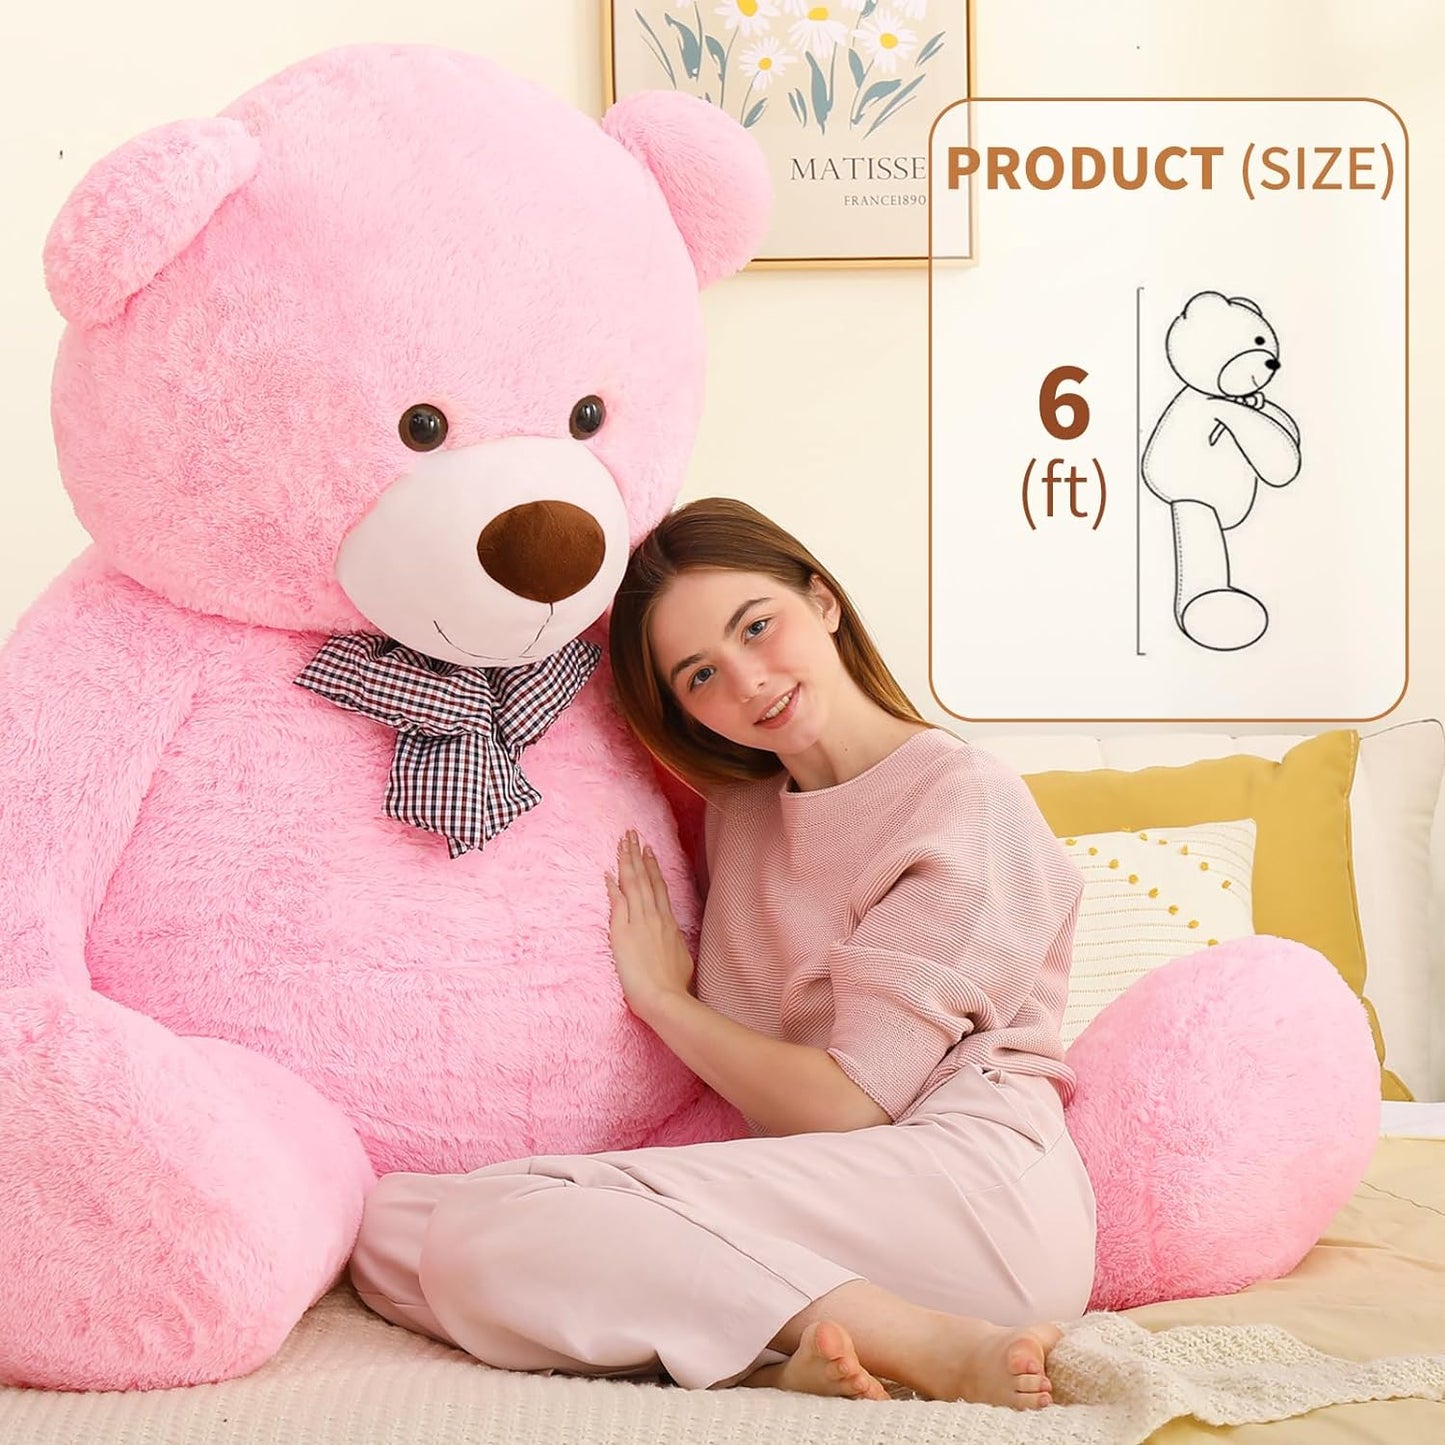 Life Size Teddy Bear Plush Toy, Pink, 6 FT - MorisMos Stuffed Animals